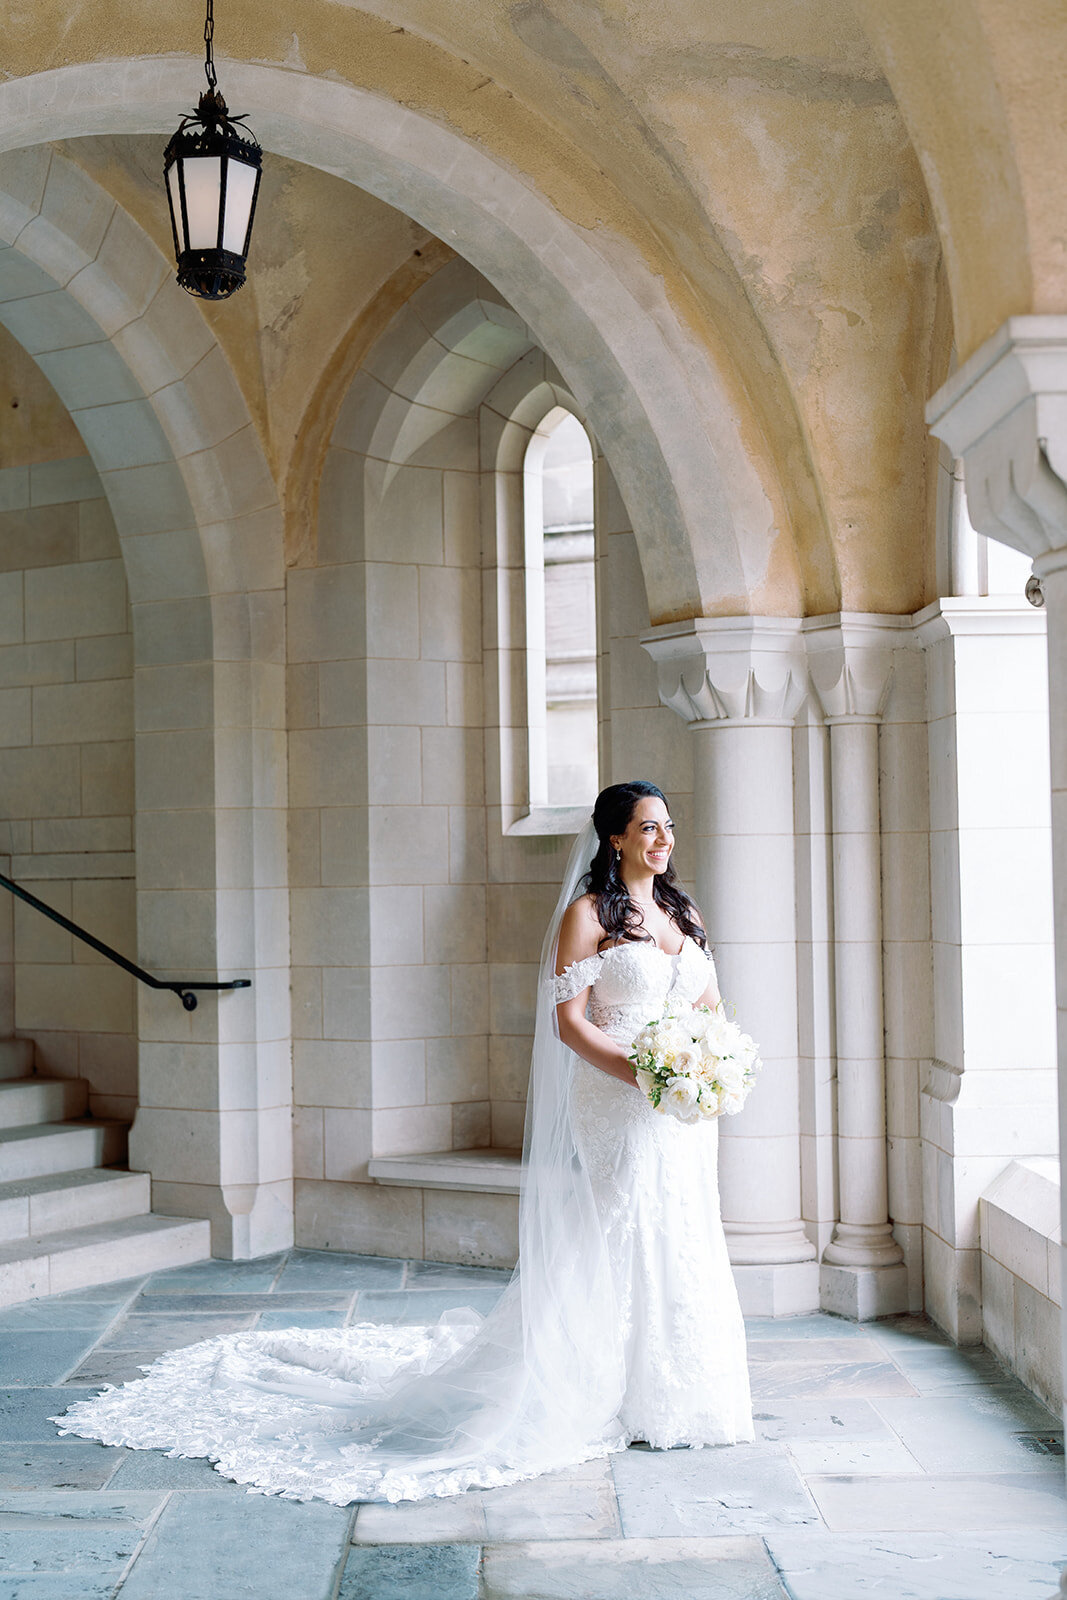 Klaire-Dixius-Photography-Salamander-DC-Washington-DC-wedding-national-cathedral-st-sophias-marios-suzy-highlights-56